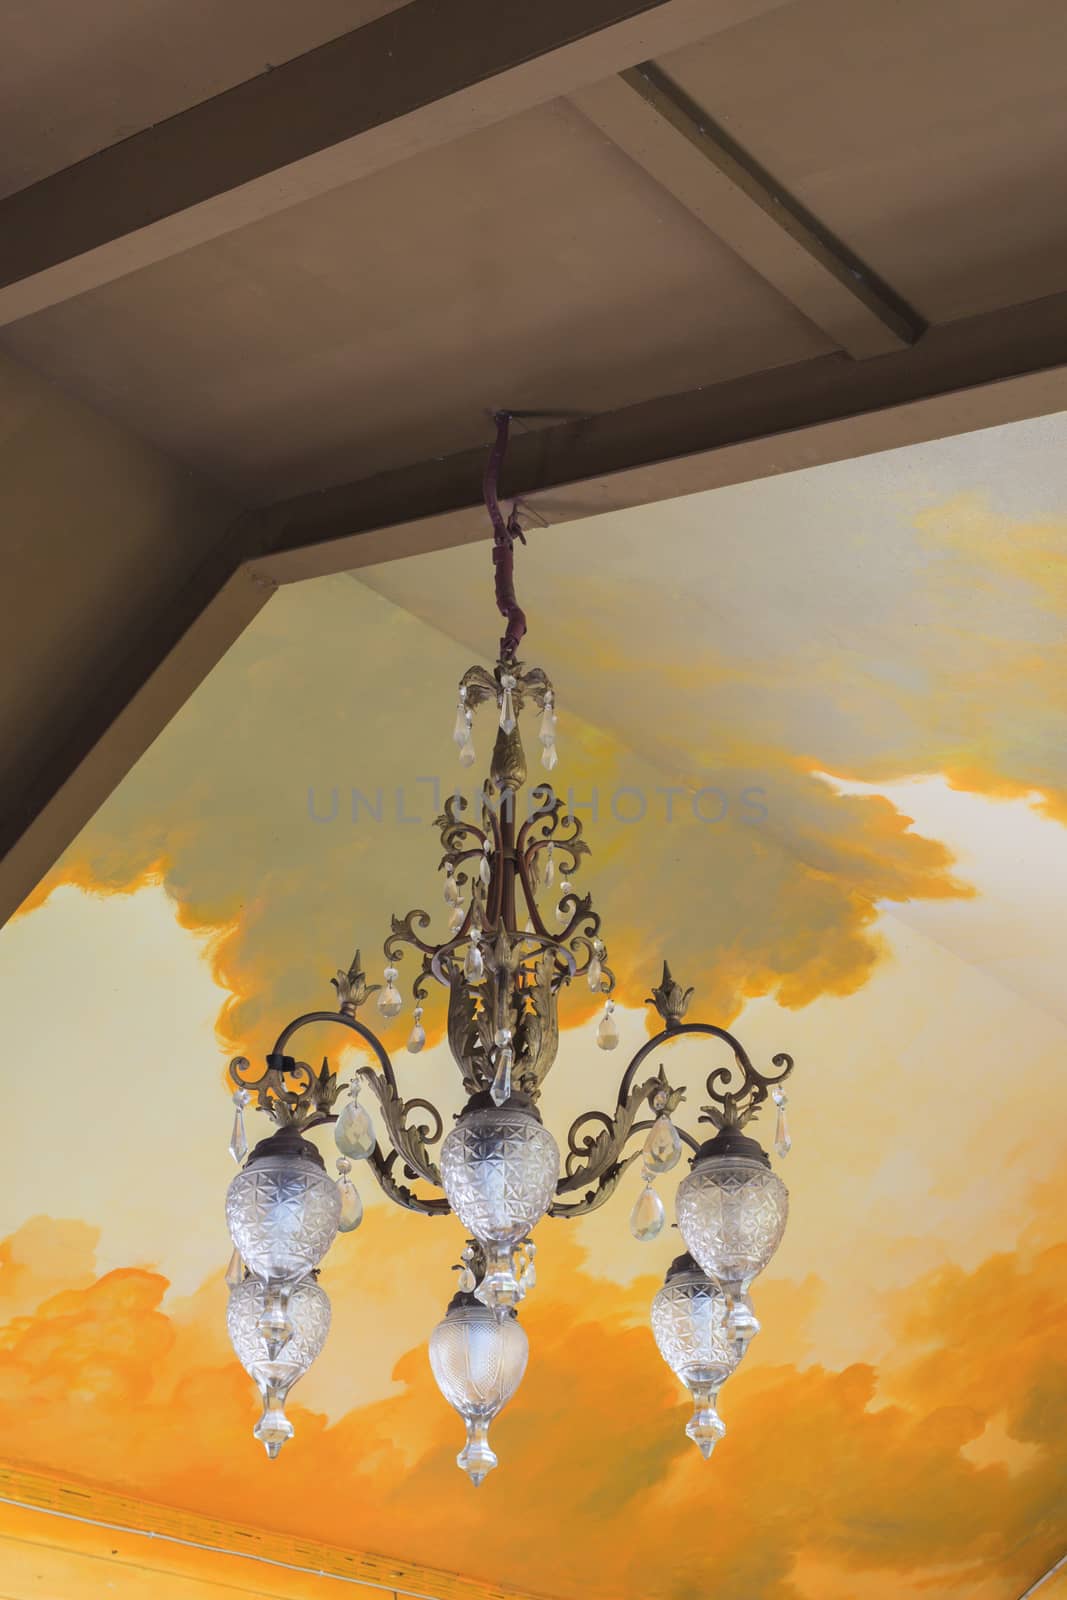 Vintage Crystal chandelier on ceiling